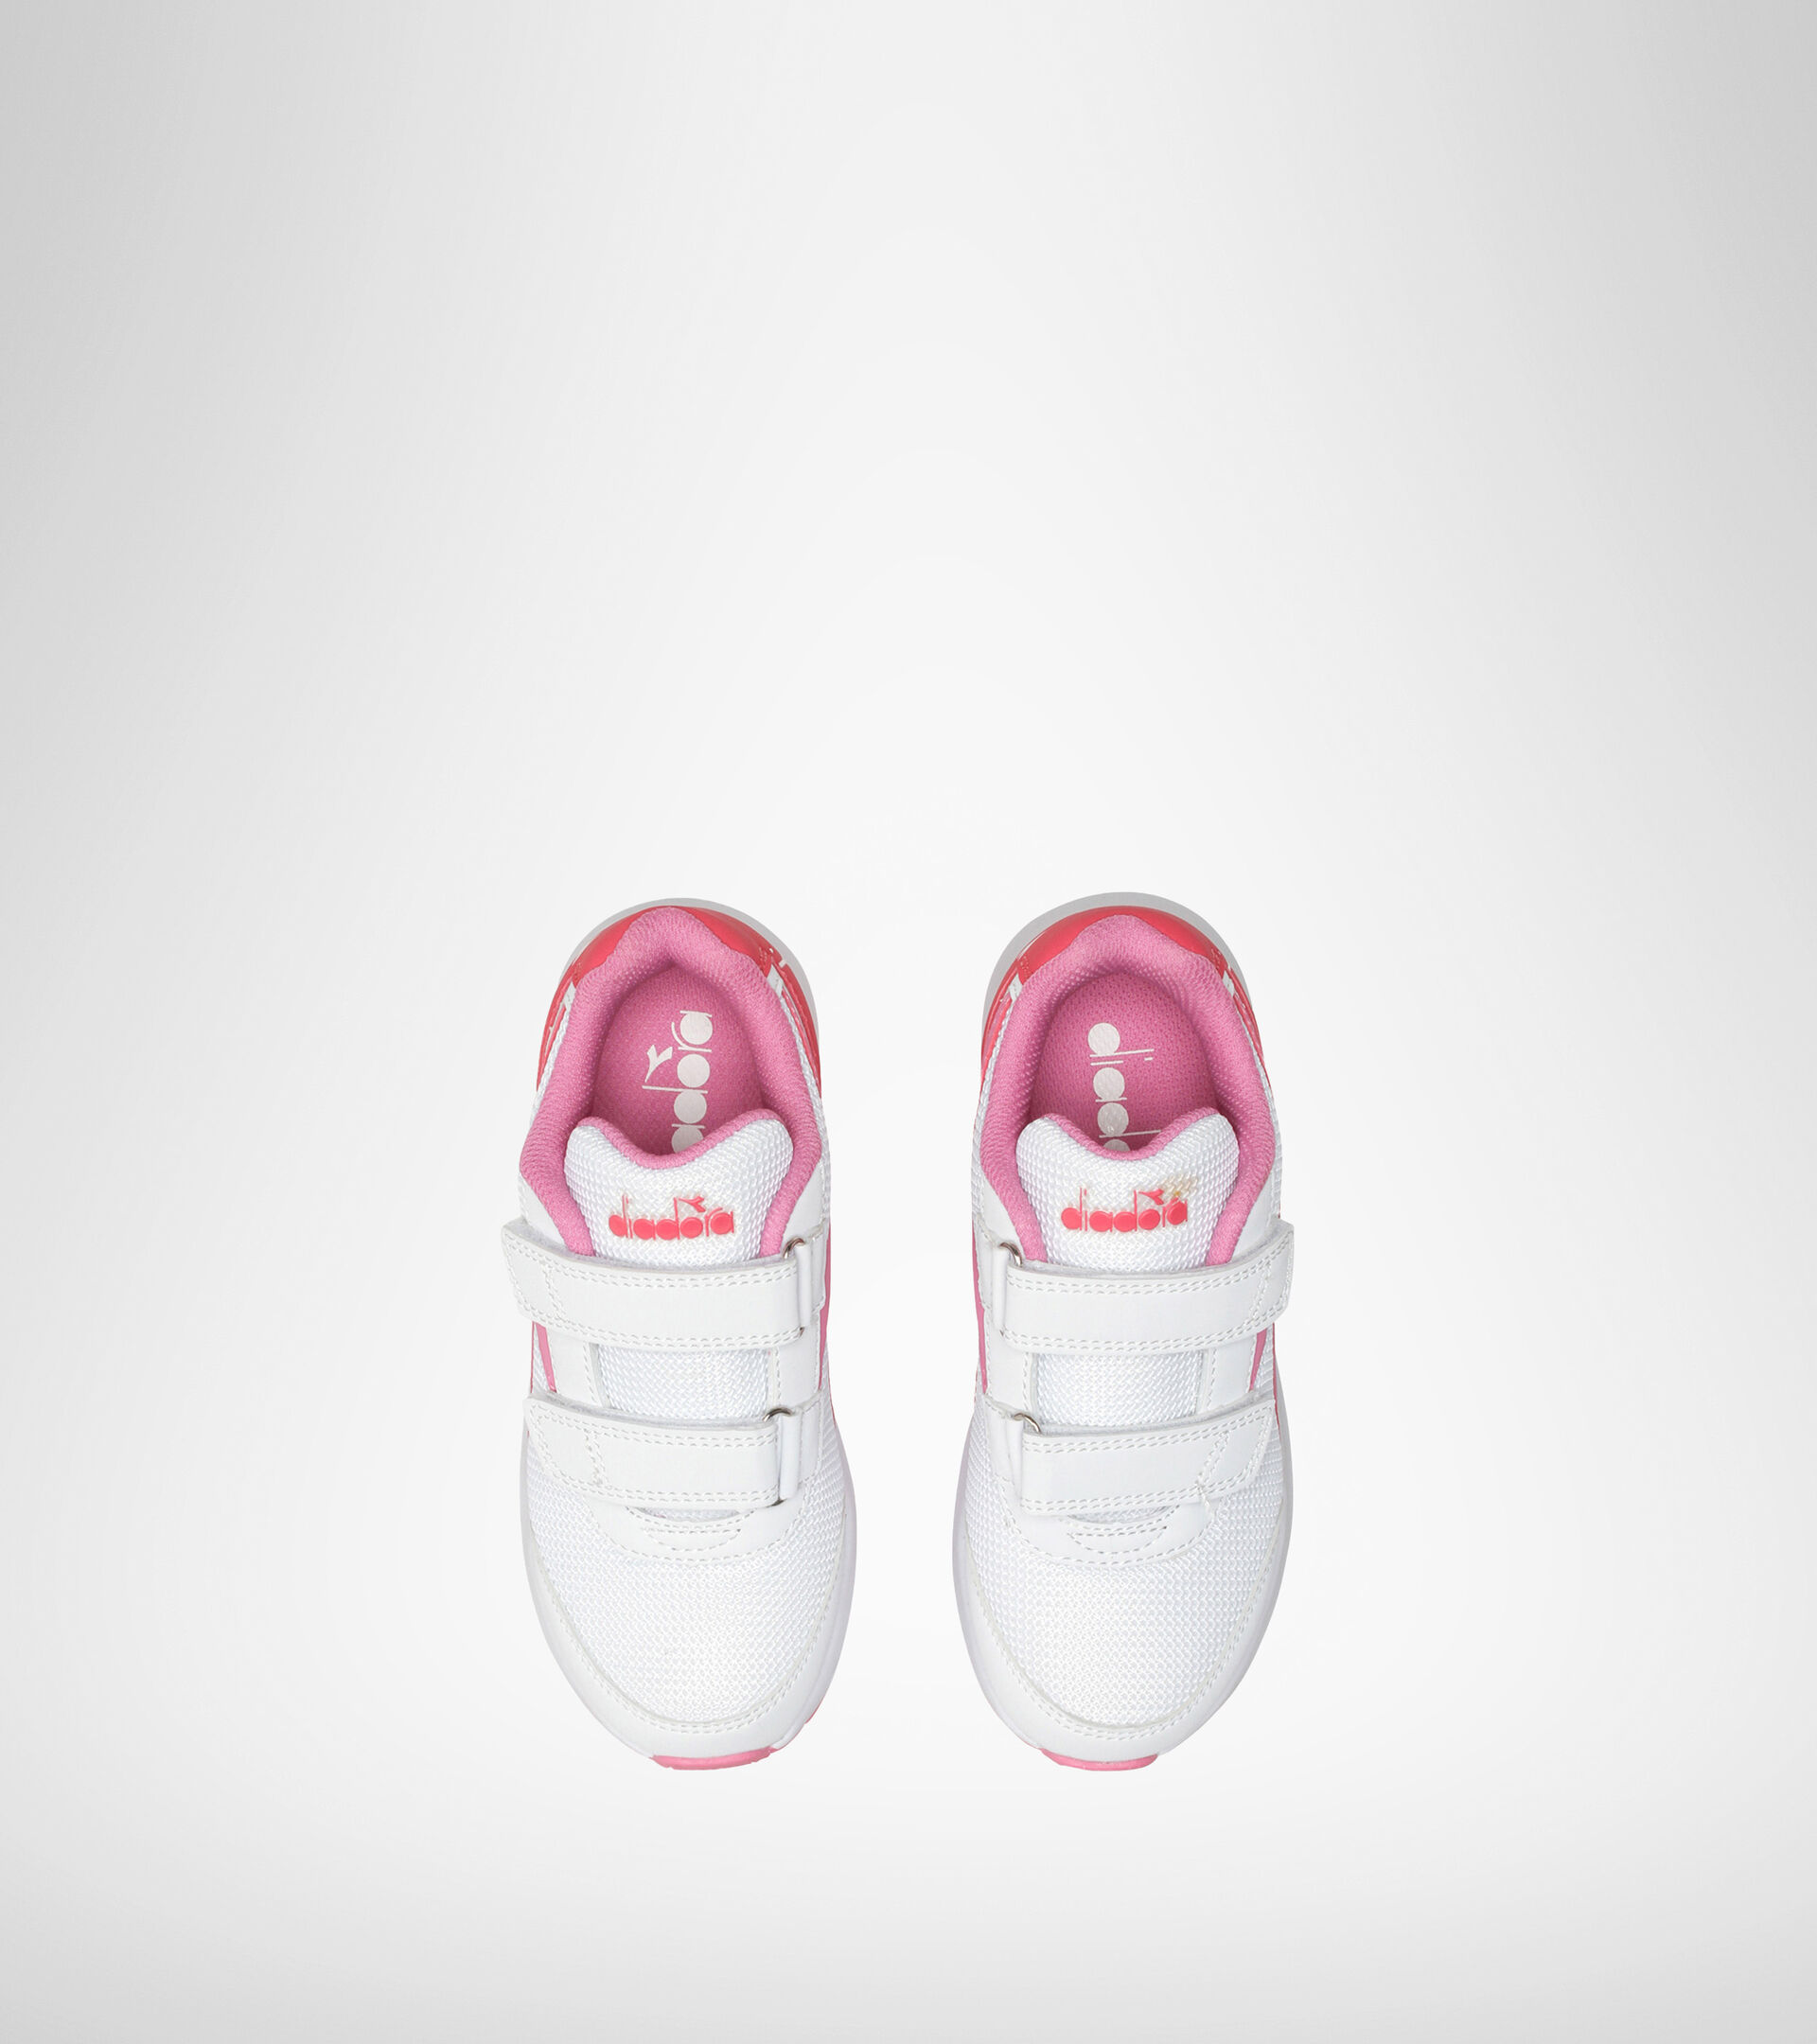 Running shoe - Kids FALCON JR V WHITE/ORCHID PINK - Diadora